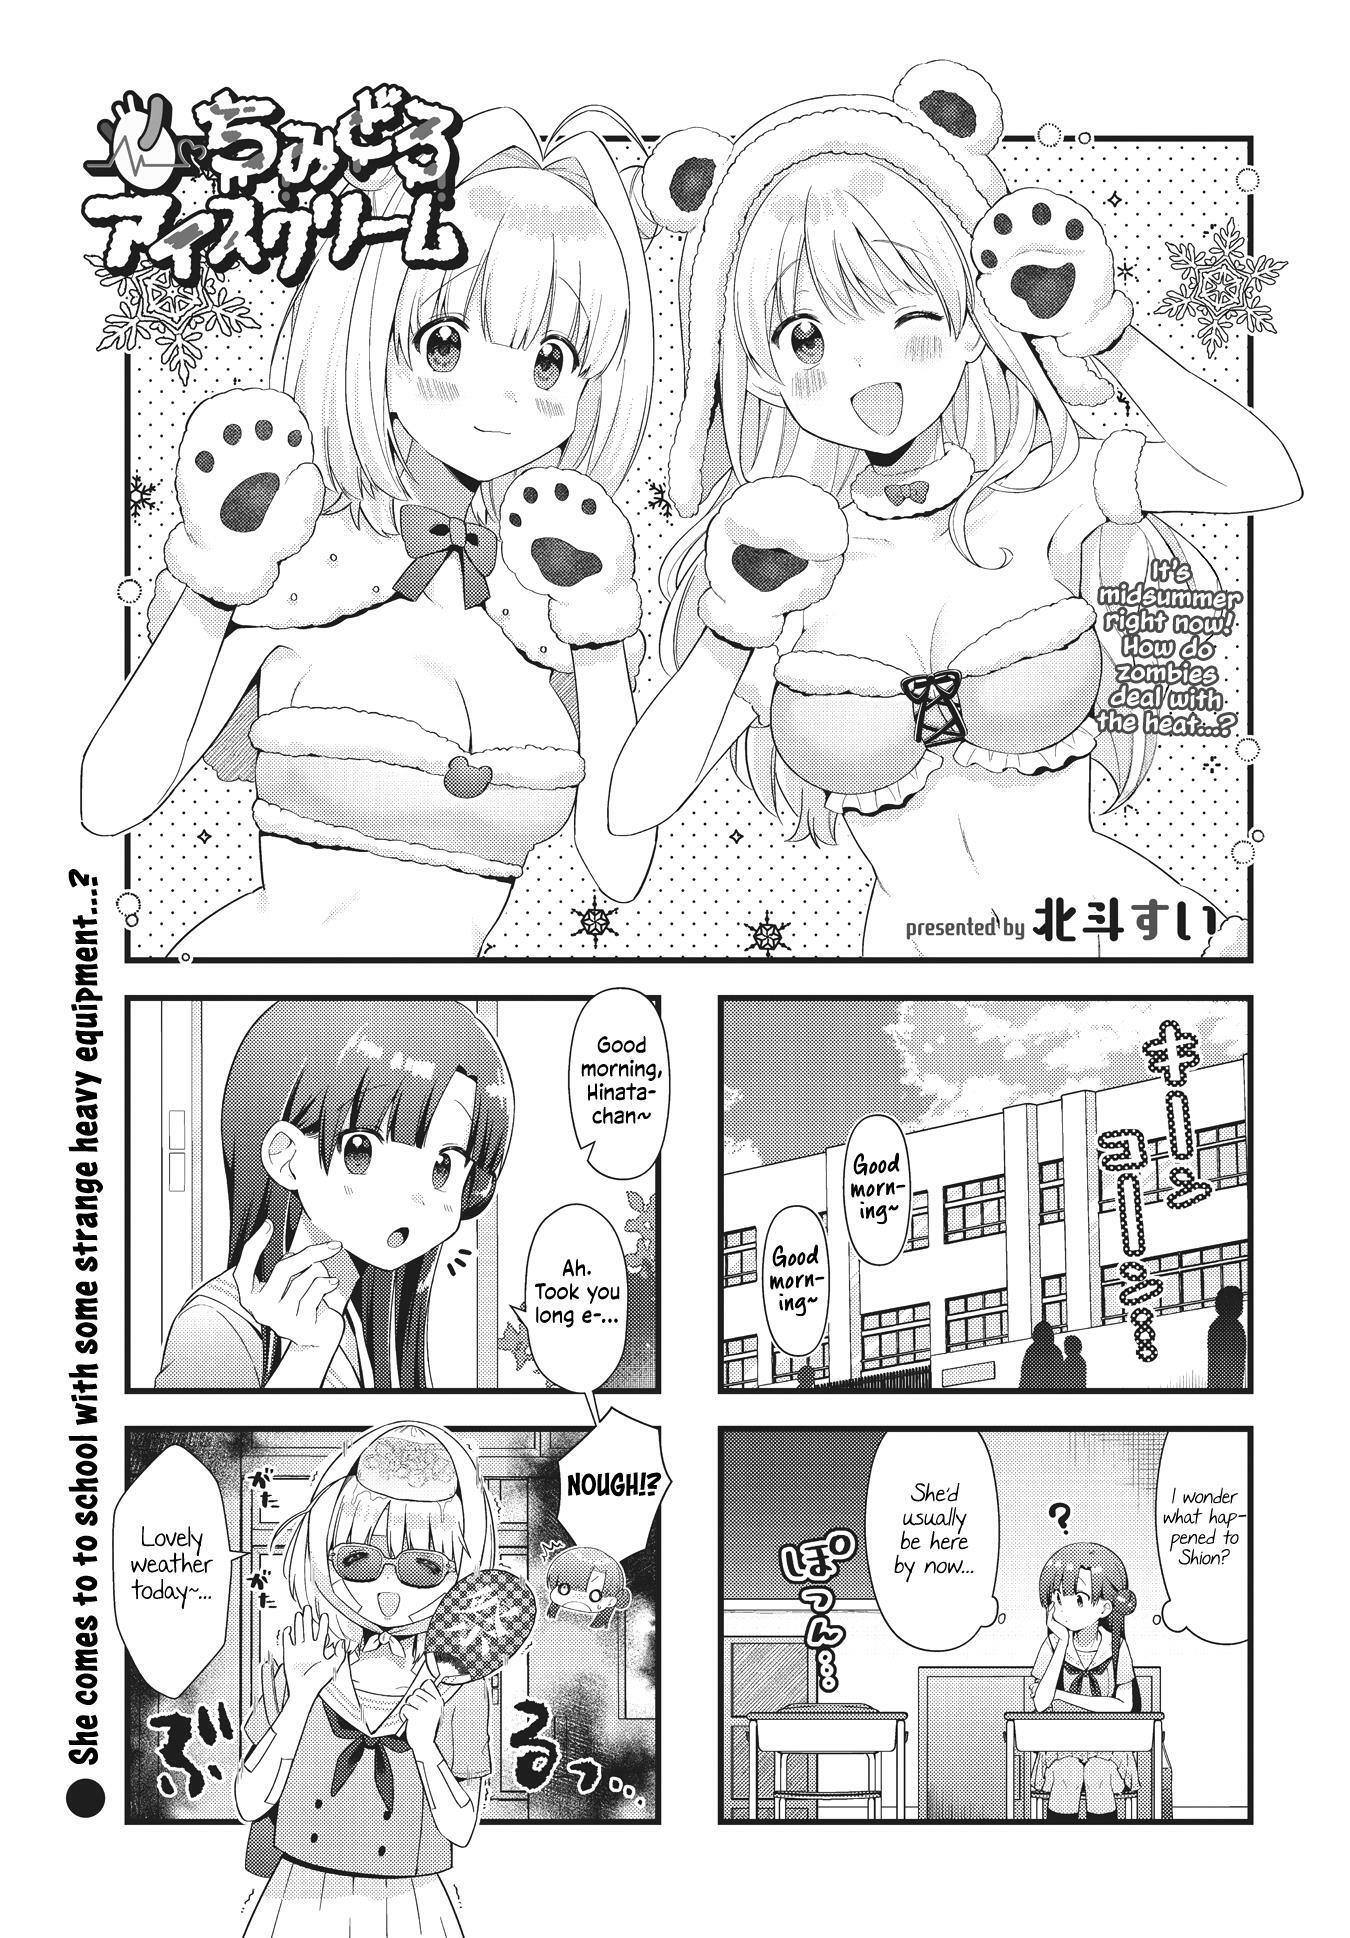 Read Manga I Can Copy Talents - Chapter 10